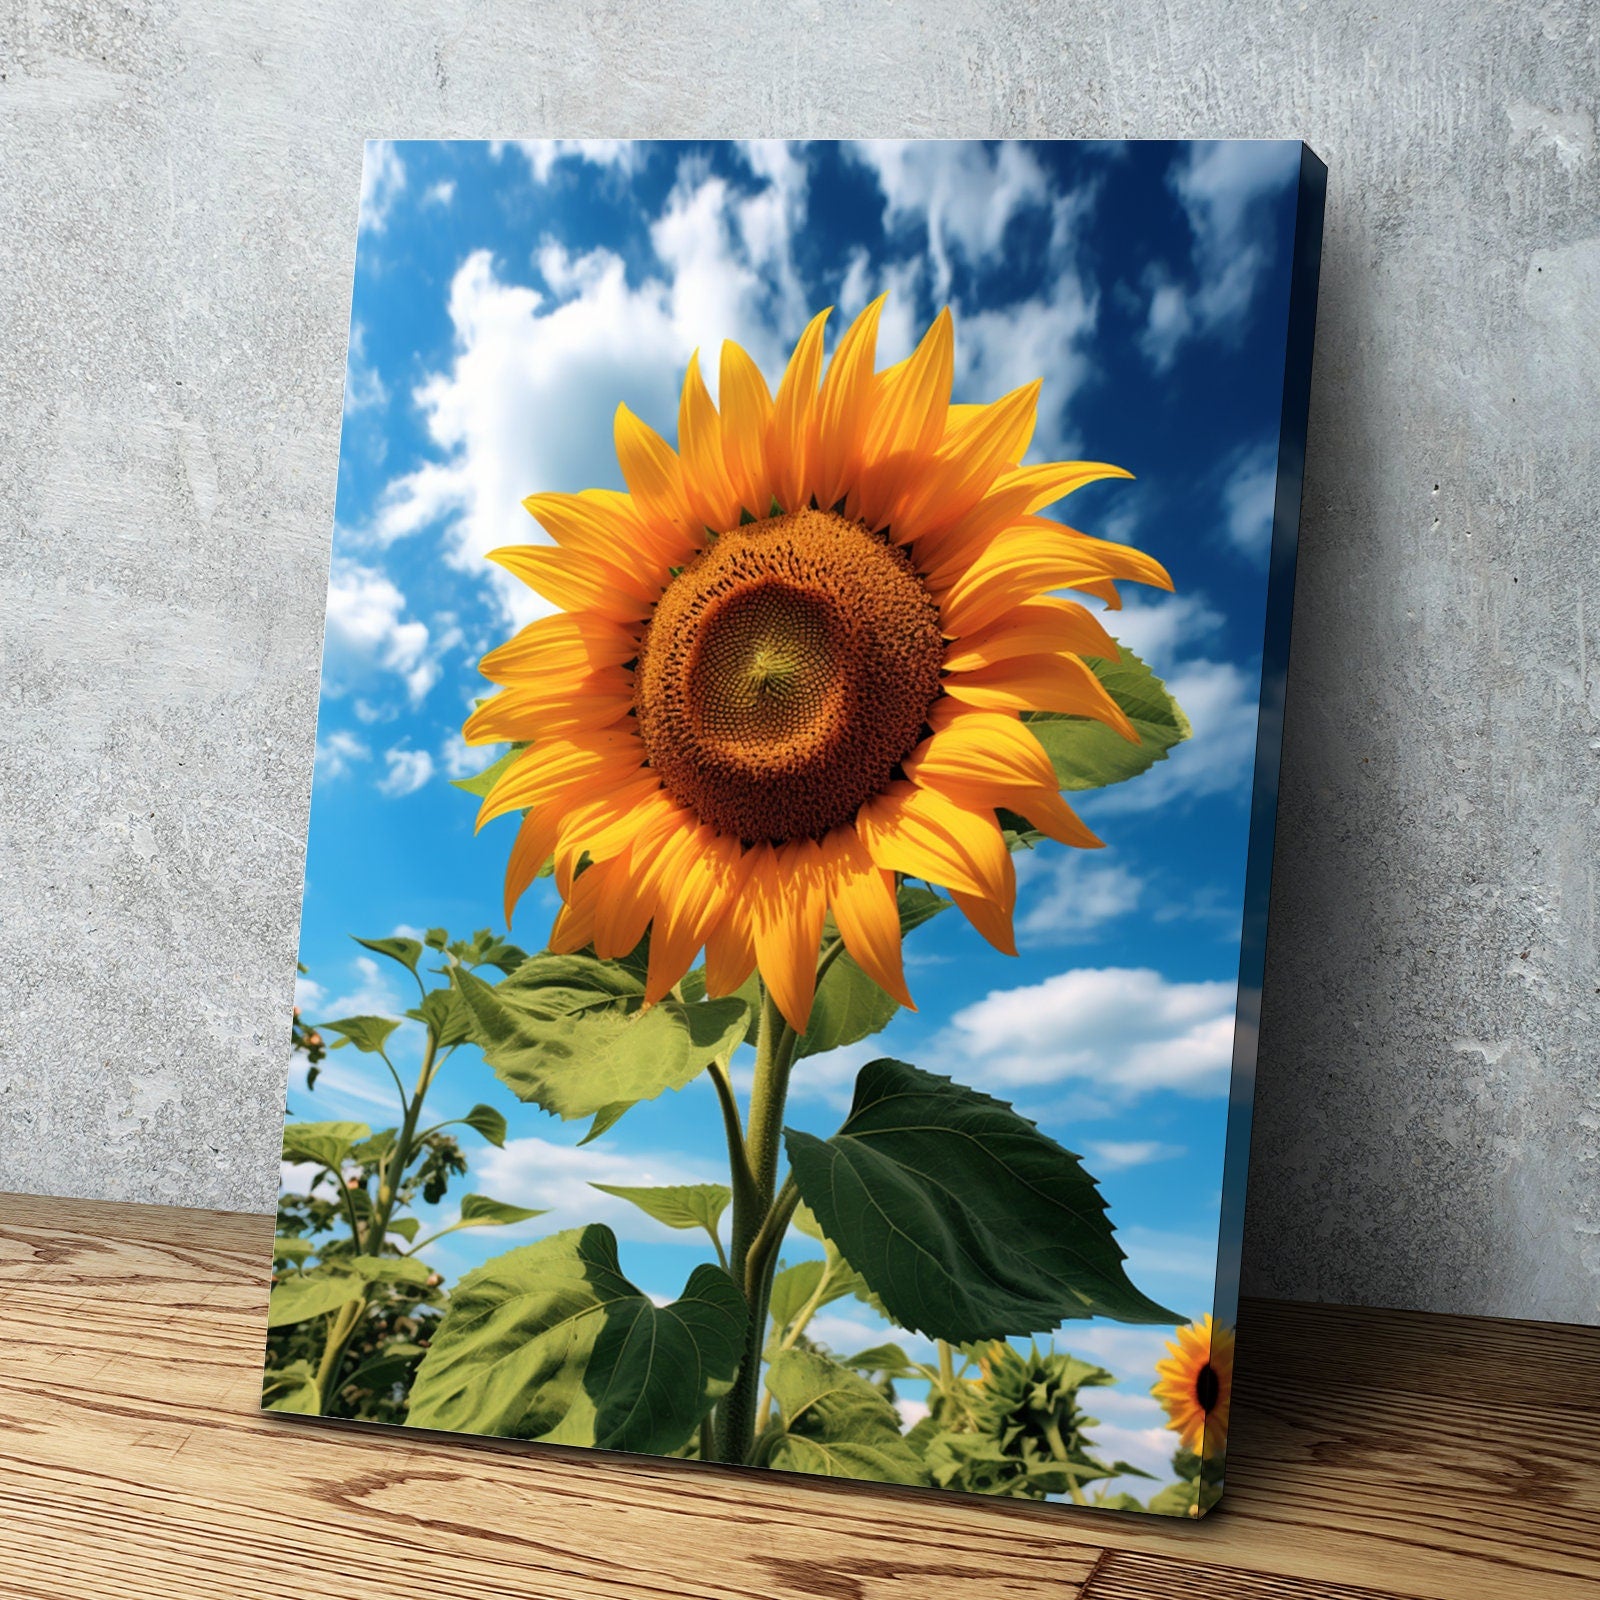 Sunflower Canvas Painting, Summer Sunflower Field Flowers Yellow